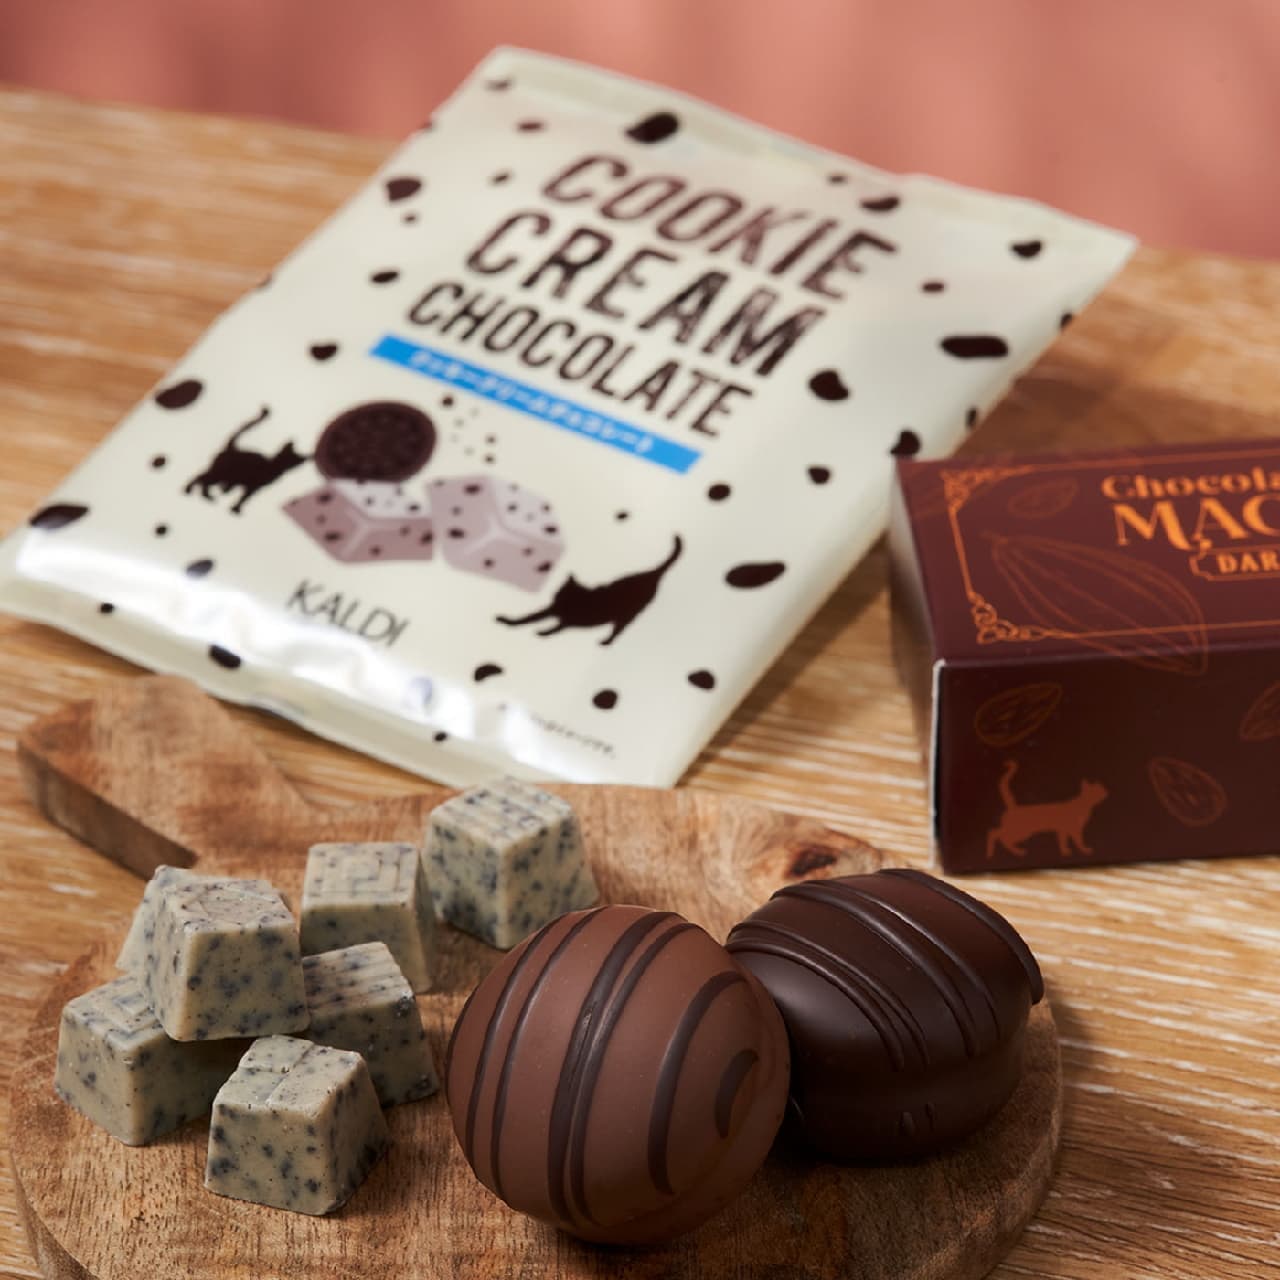 KALDI's "Chocolate-Covered Macarons" and "Cookie Cream Chocolate